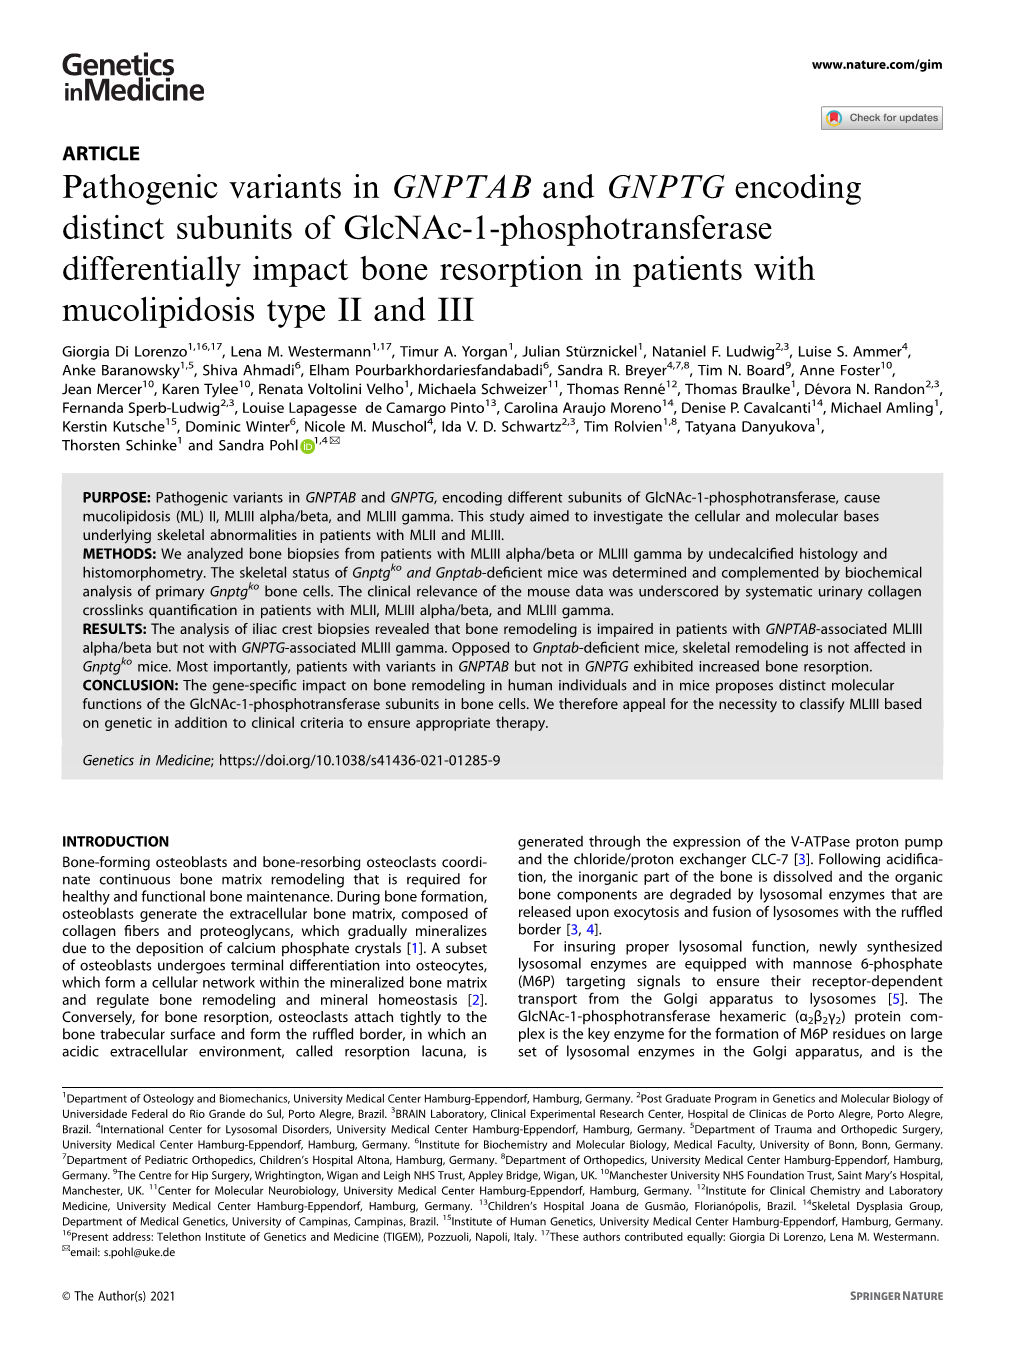 Pathogenic Variants in GNPTAB and GNPTG Encoding Distinct Subunits